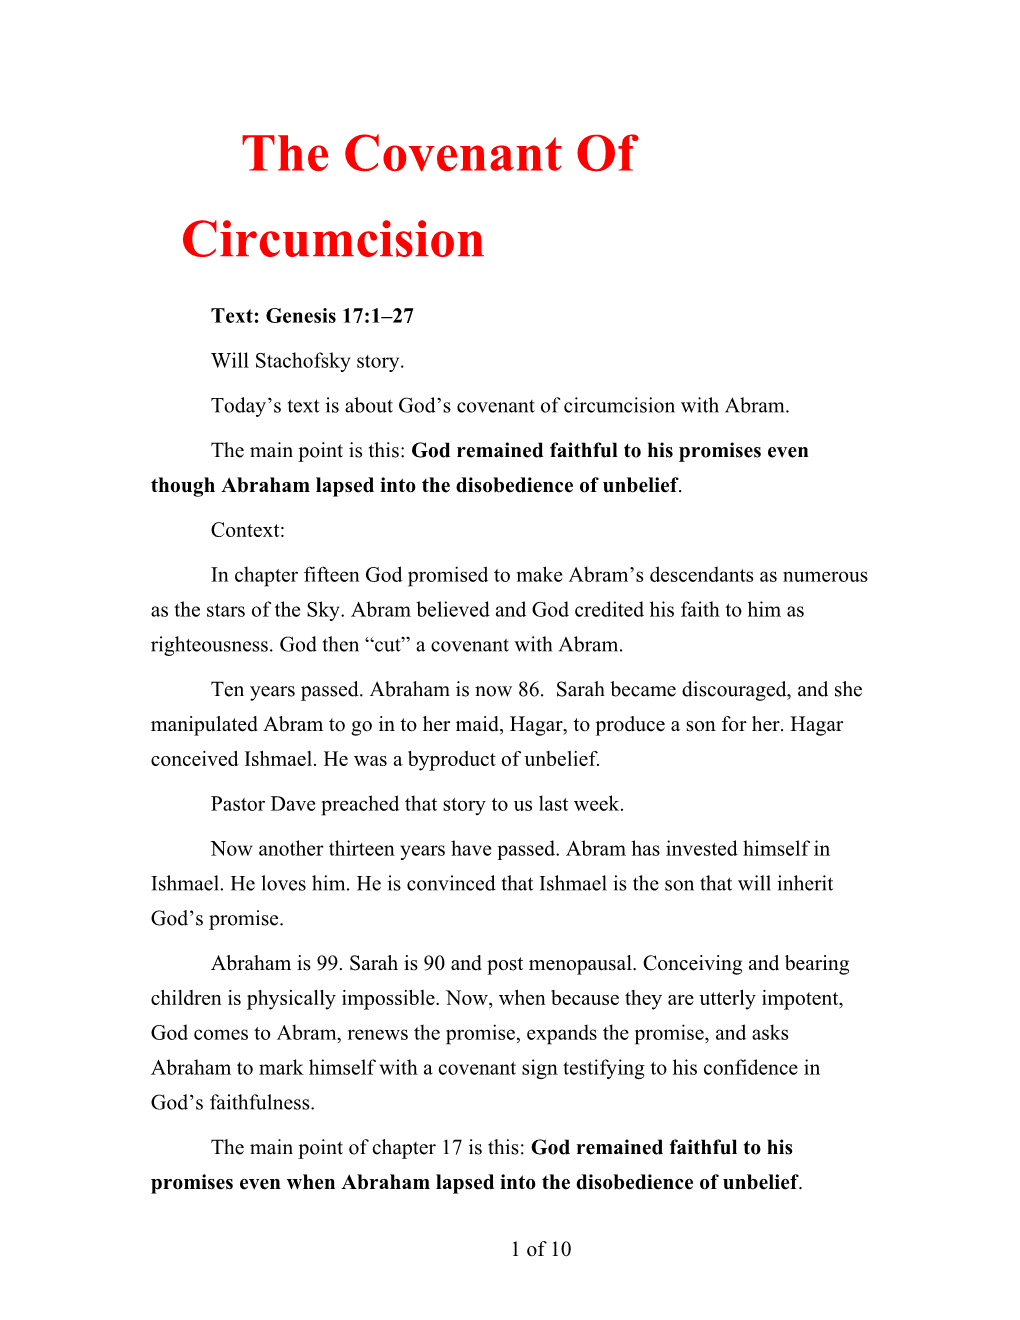 The Covenant of Circumcision